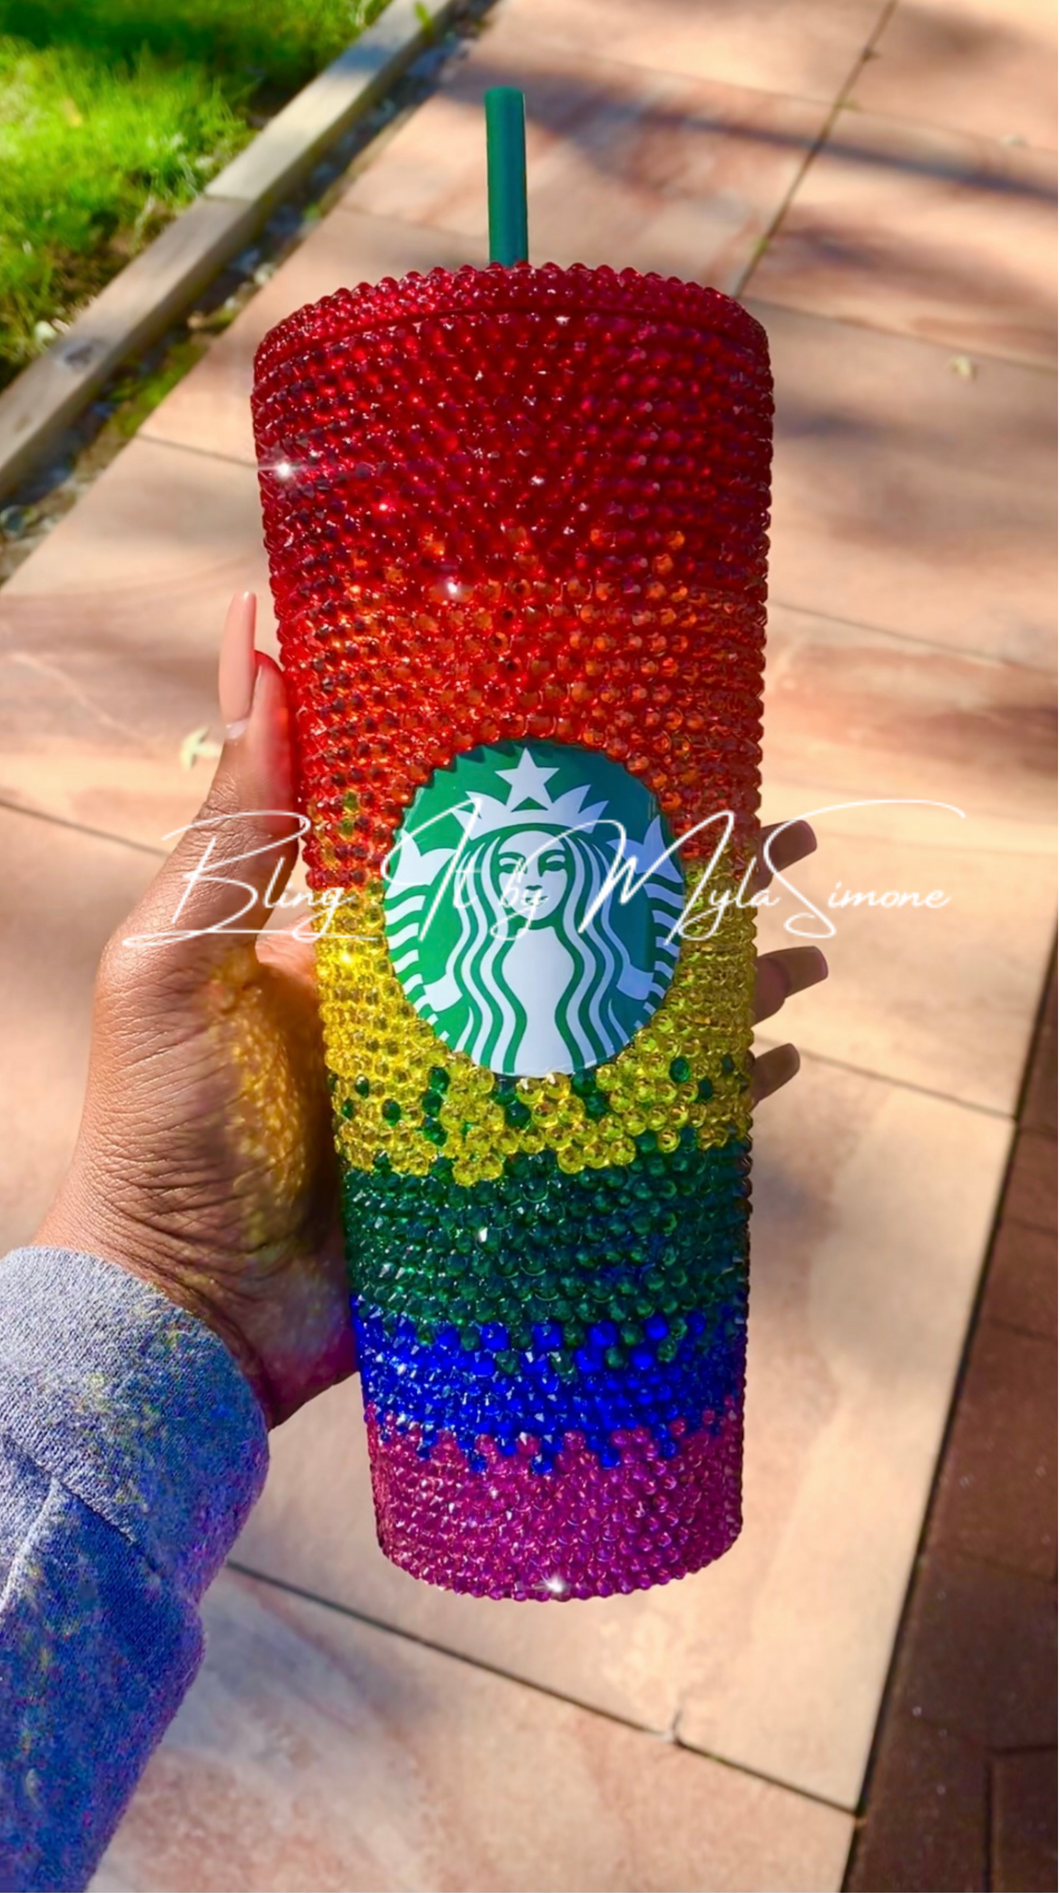 PRIDE Rainbow Starbucks Cup